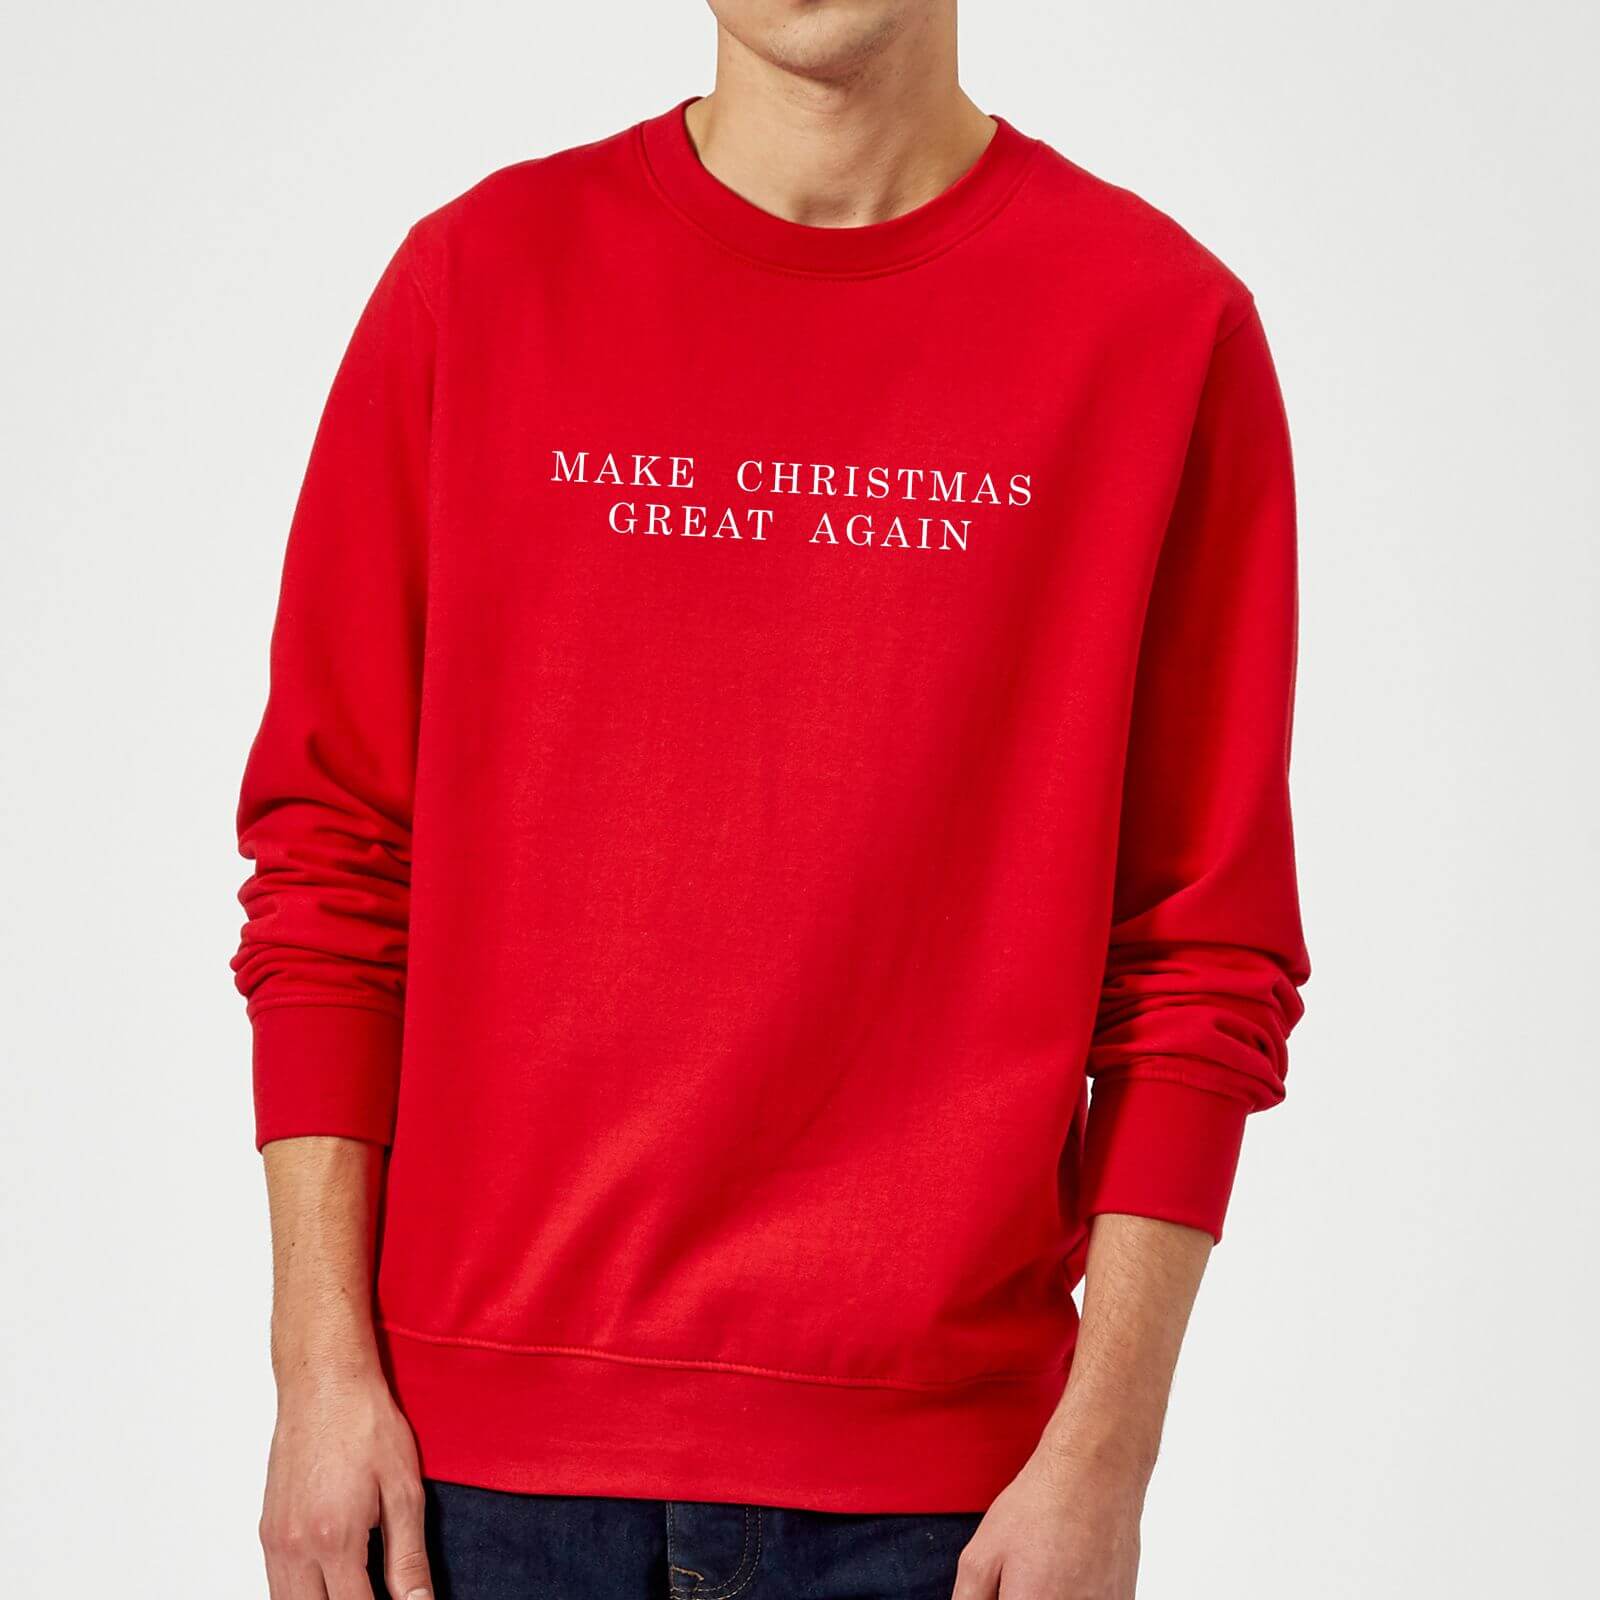 Make Christmas Great Again Sweatshirt - Red - M